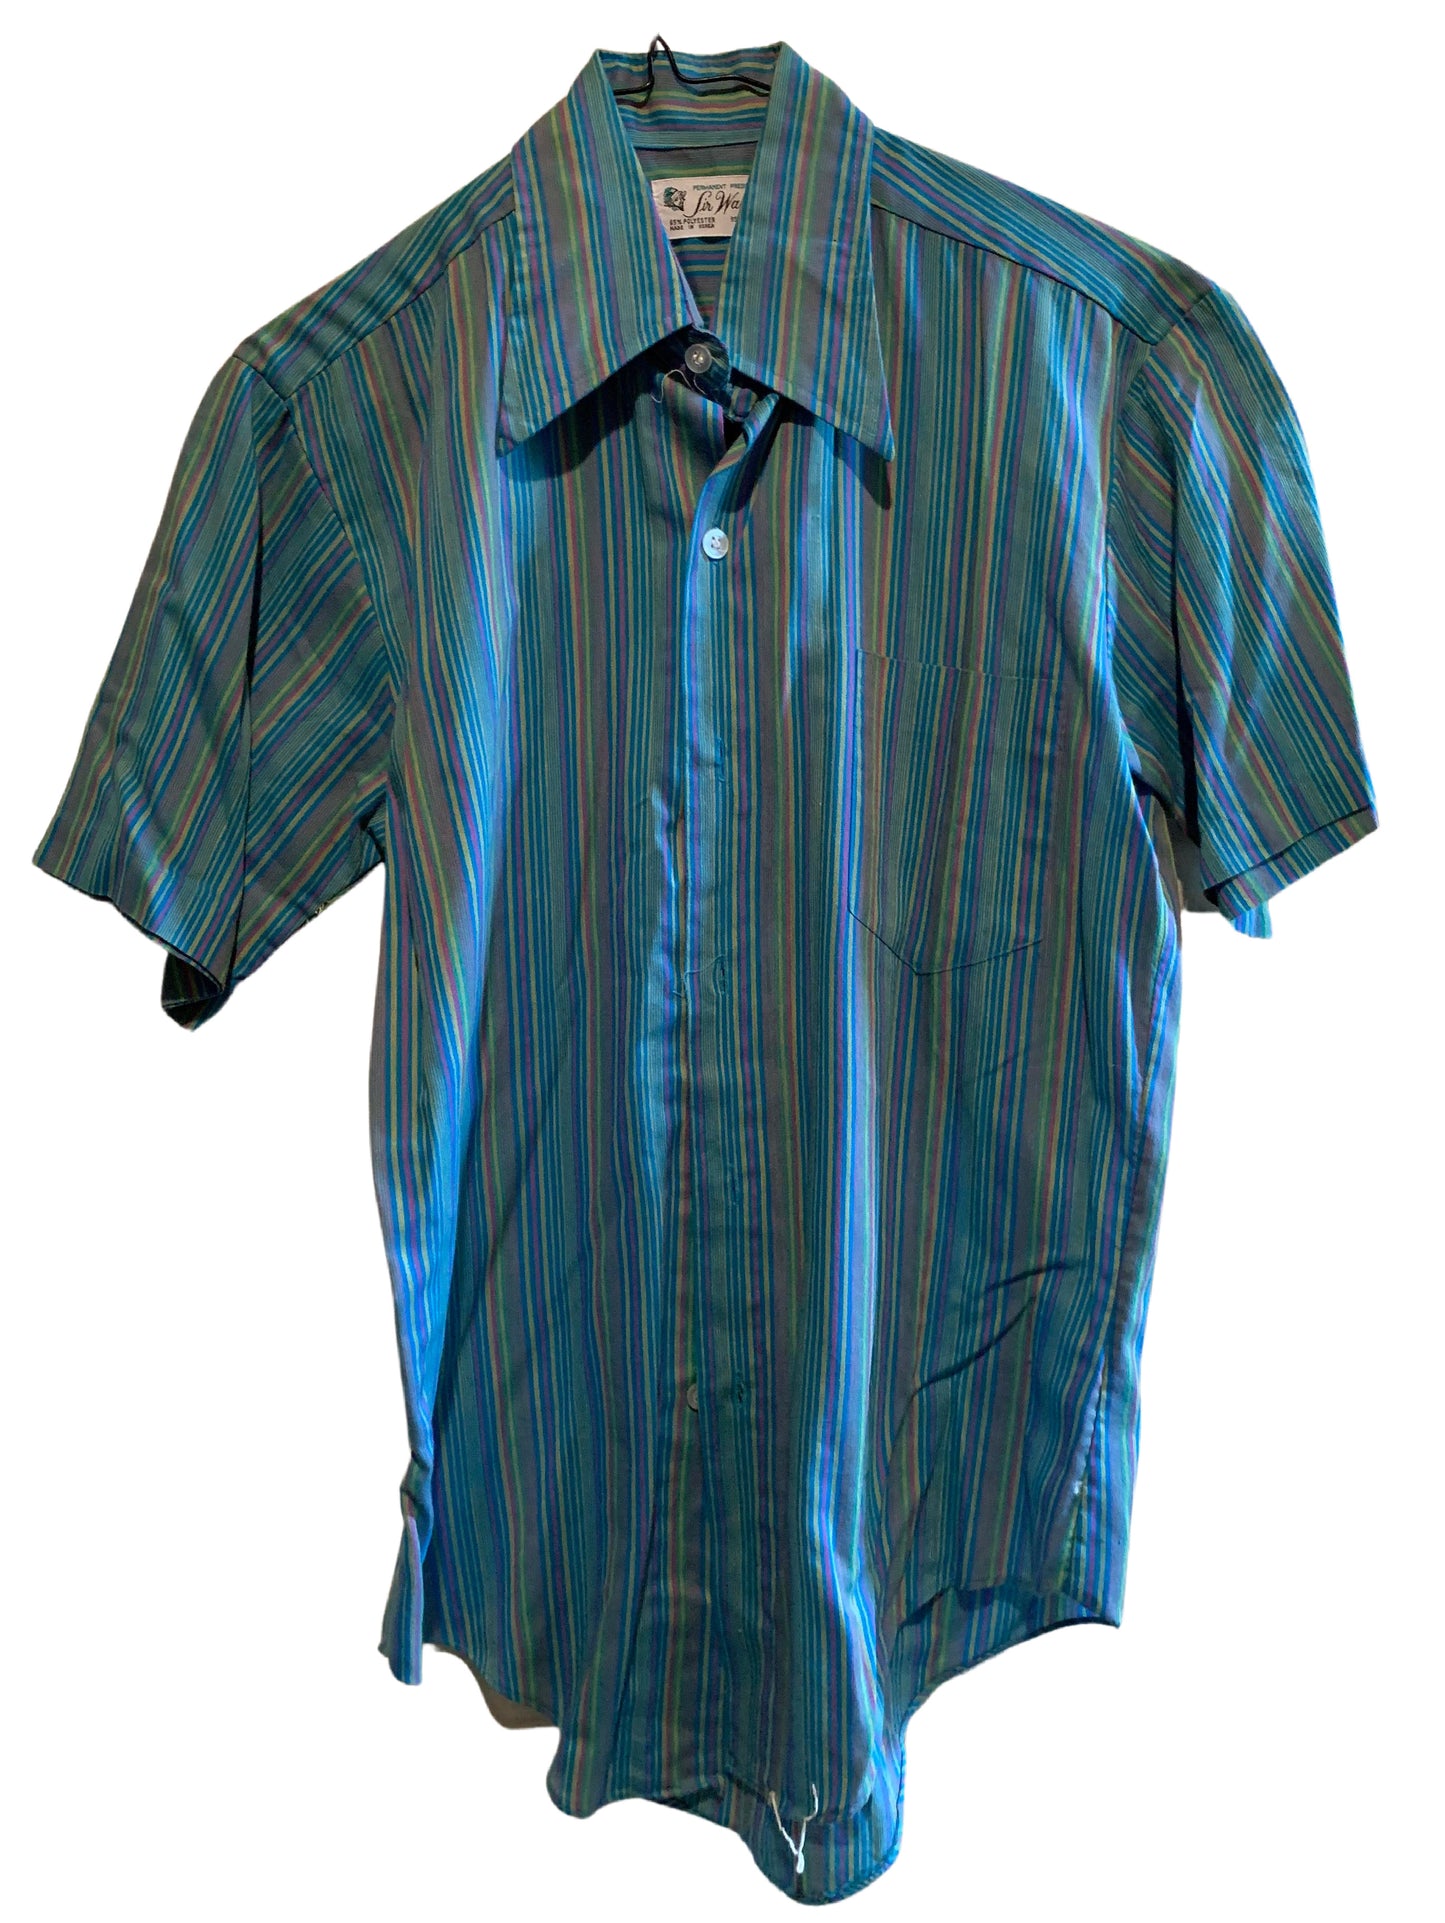 Multicolored Vertical Stripes Button Down Shirt circa 1960s